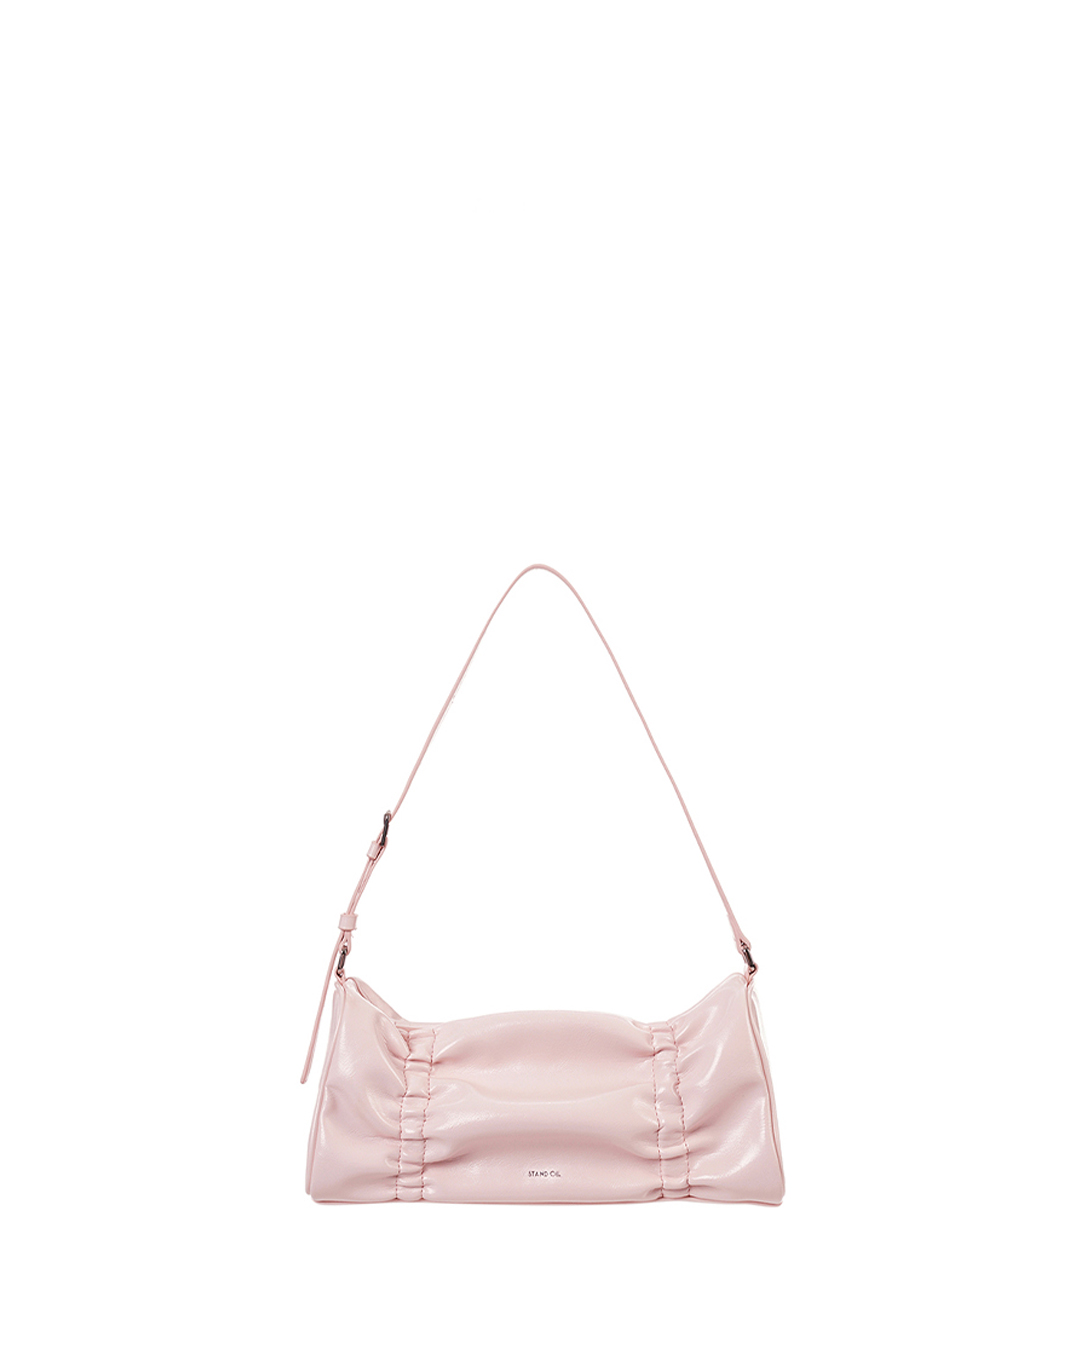 Stand Oil - Pleats Bag · 플리츠백 / 베이비 핑크